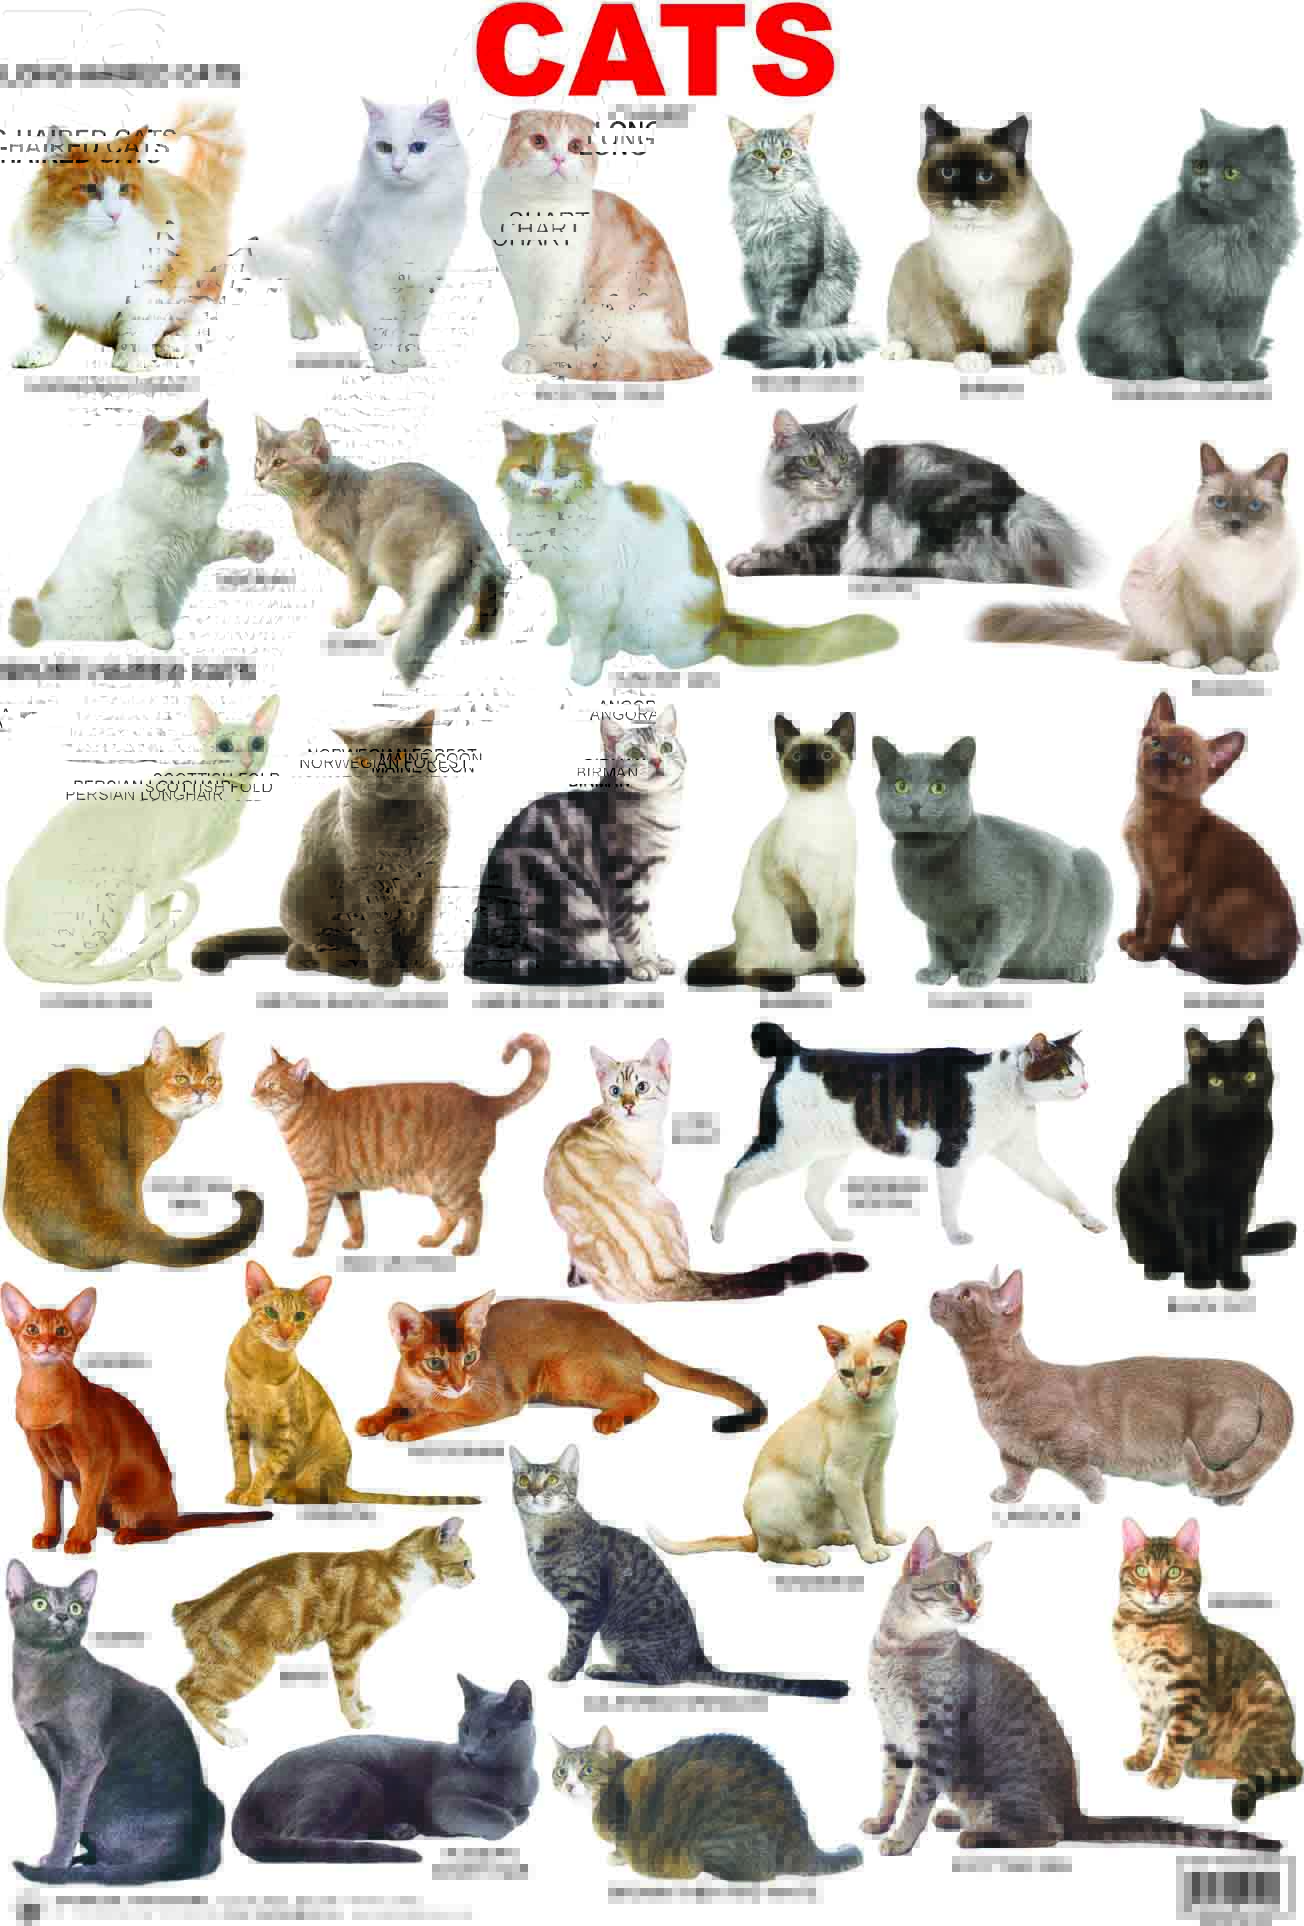 Cat breeds information, characteristics and behavior